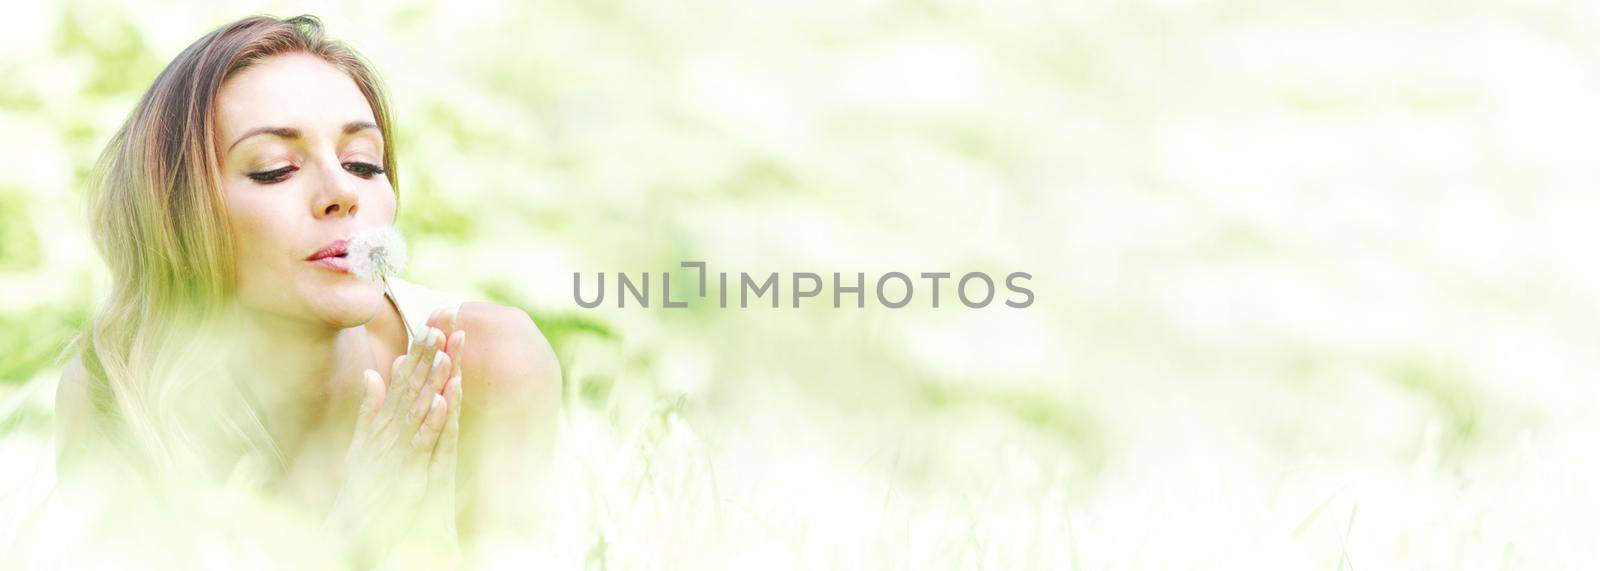 Beautiful young woman blowing dandelion lying on grass